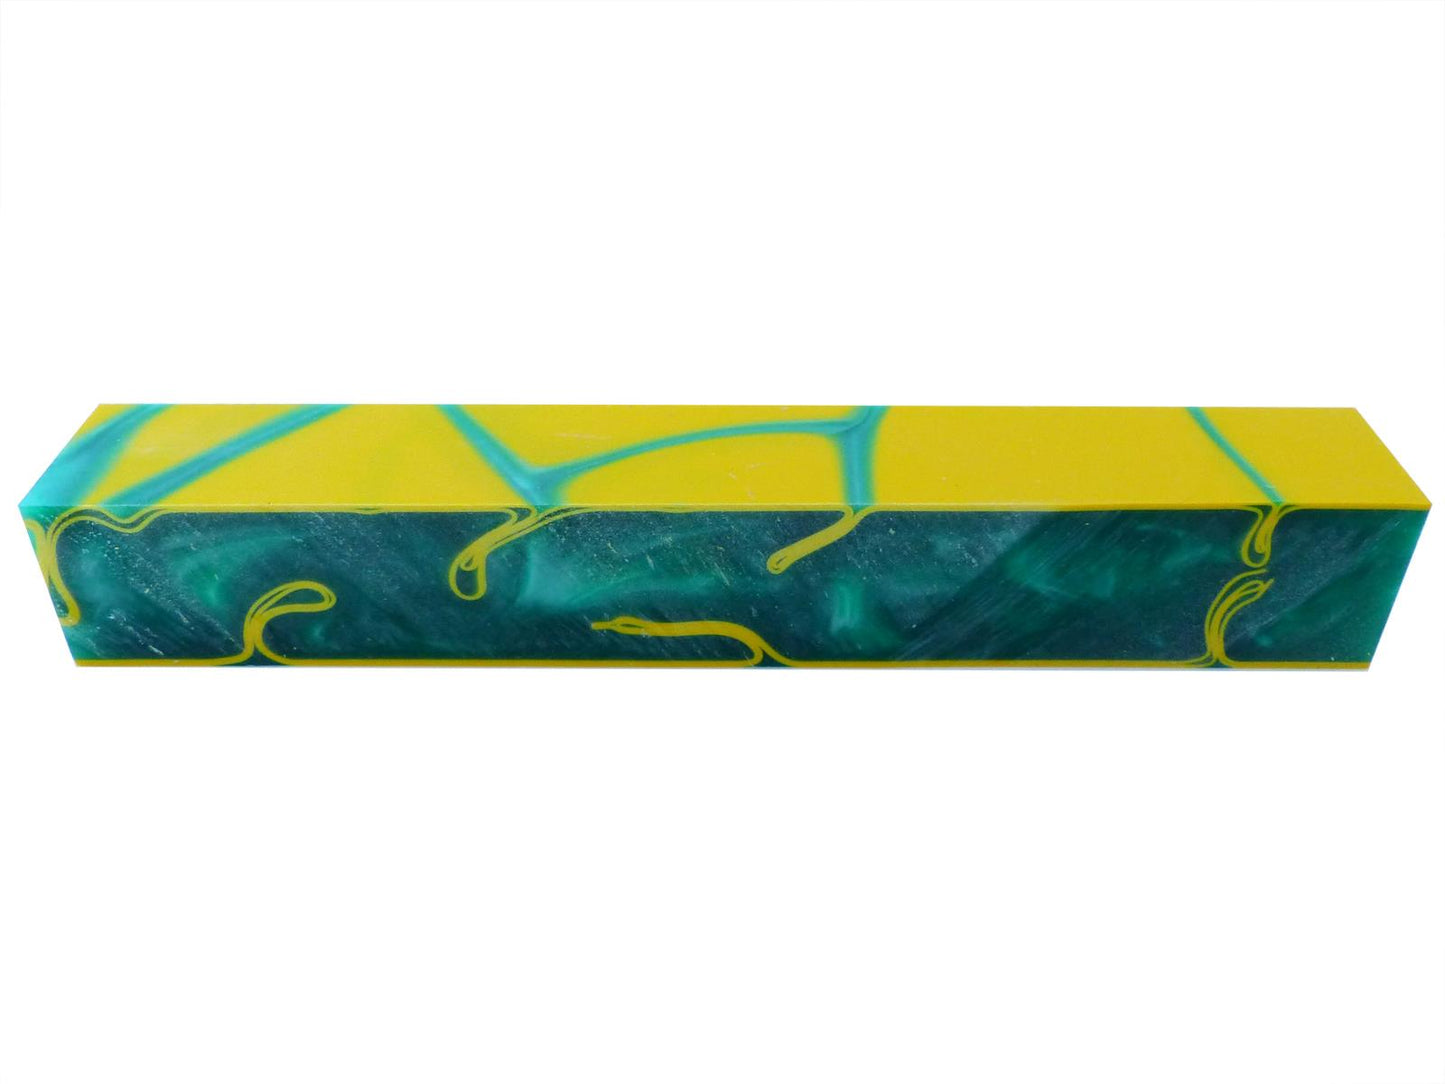 Turners' Mill Kirinite Green/Yellow Whirl Abstract Kirinite Acrylic Pen Blank - 150x20x20mm (5.9x0.79x0.79"), 6x3/4x3/4"